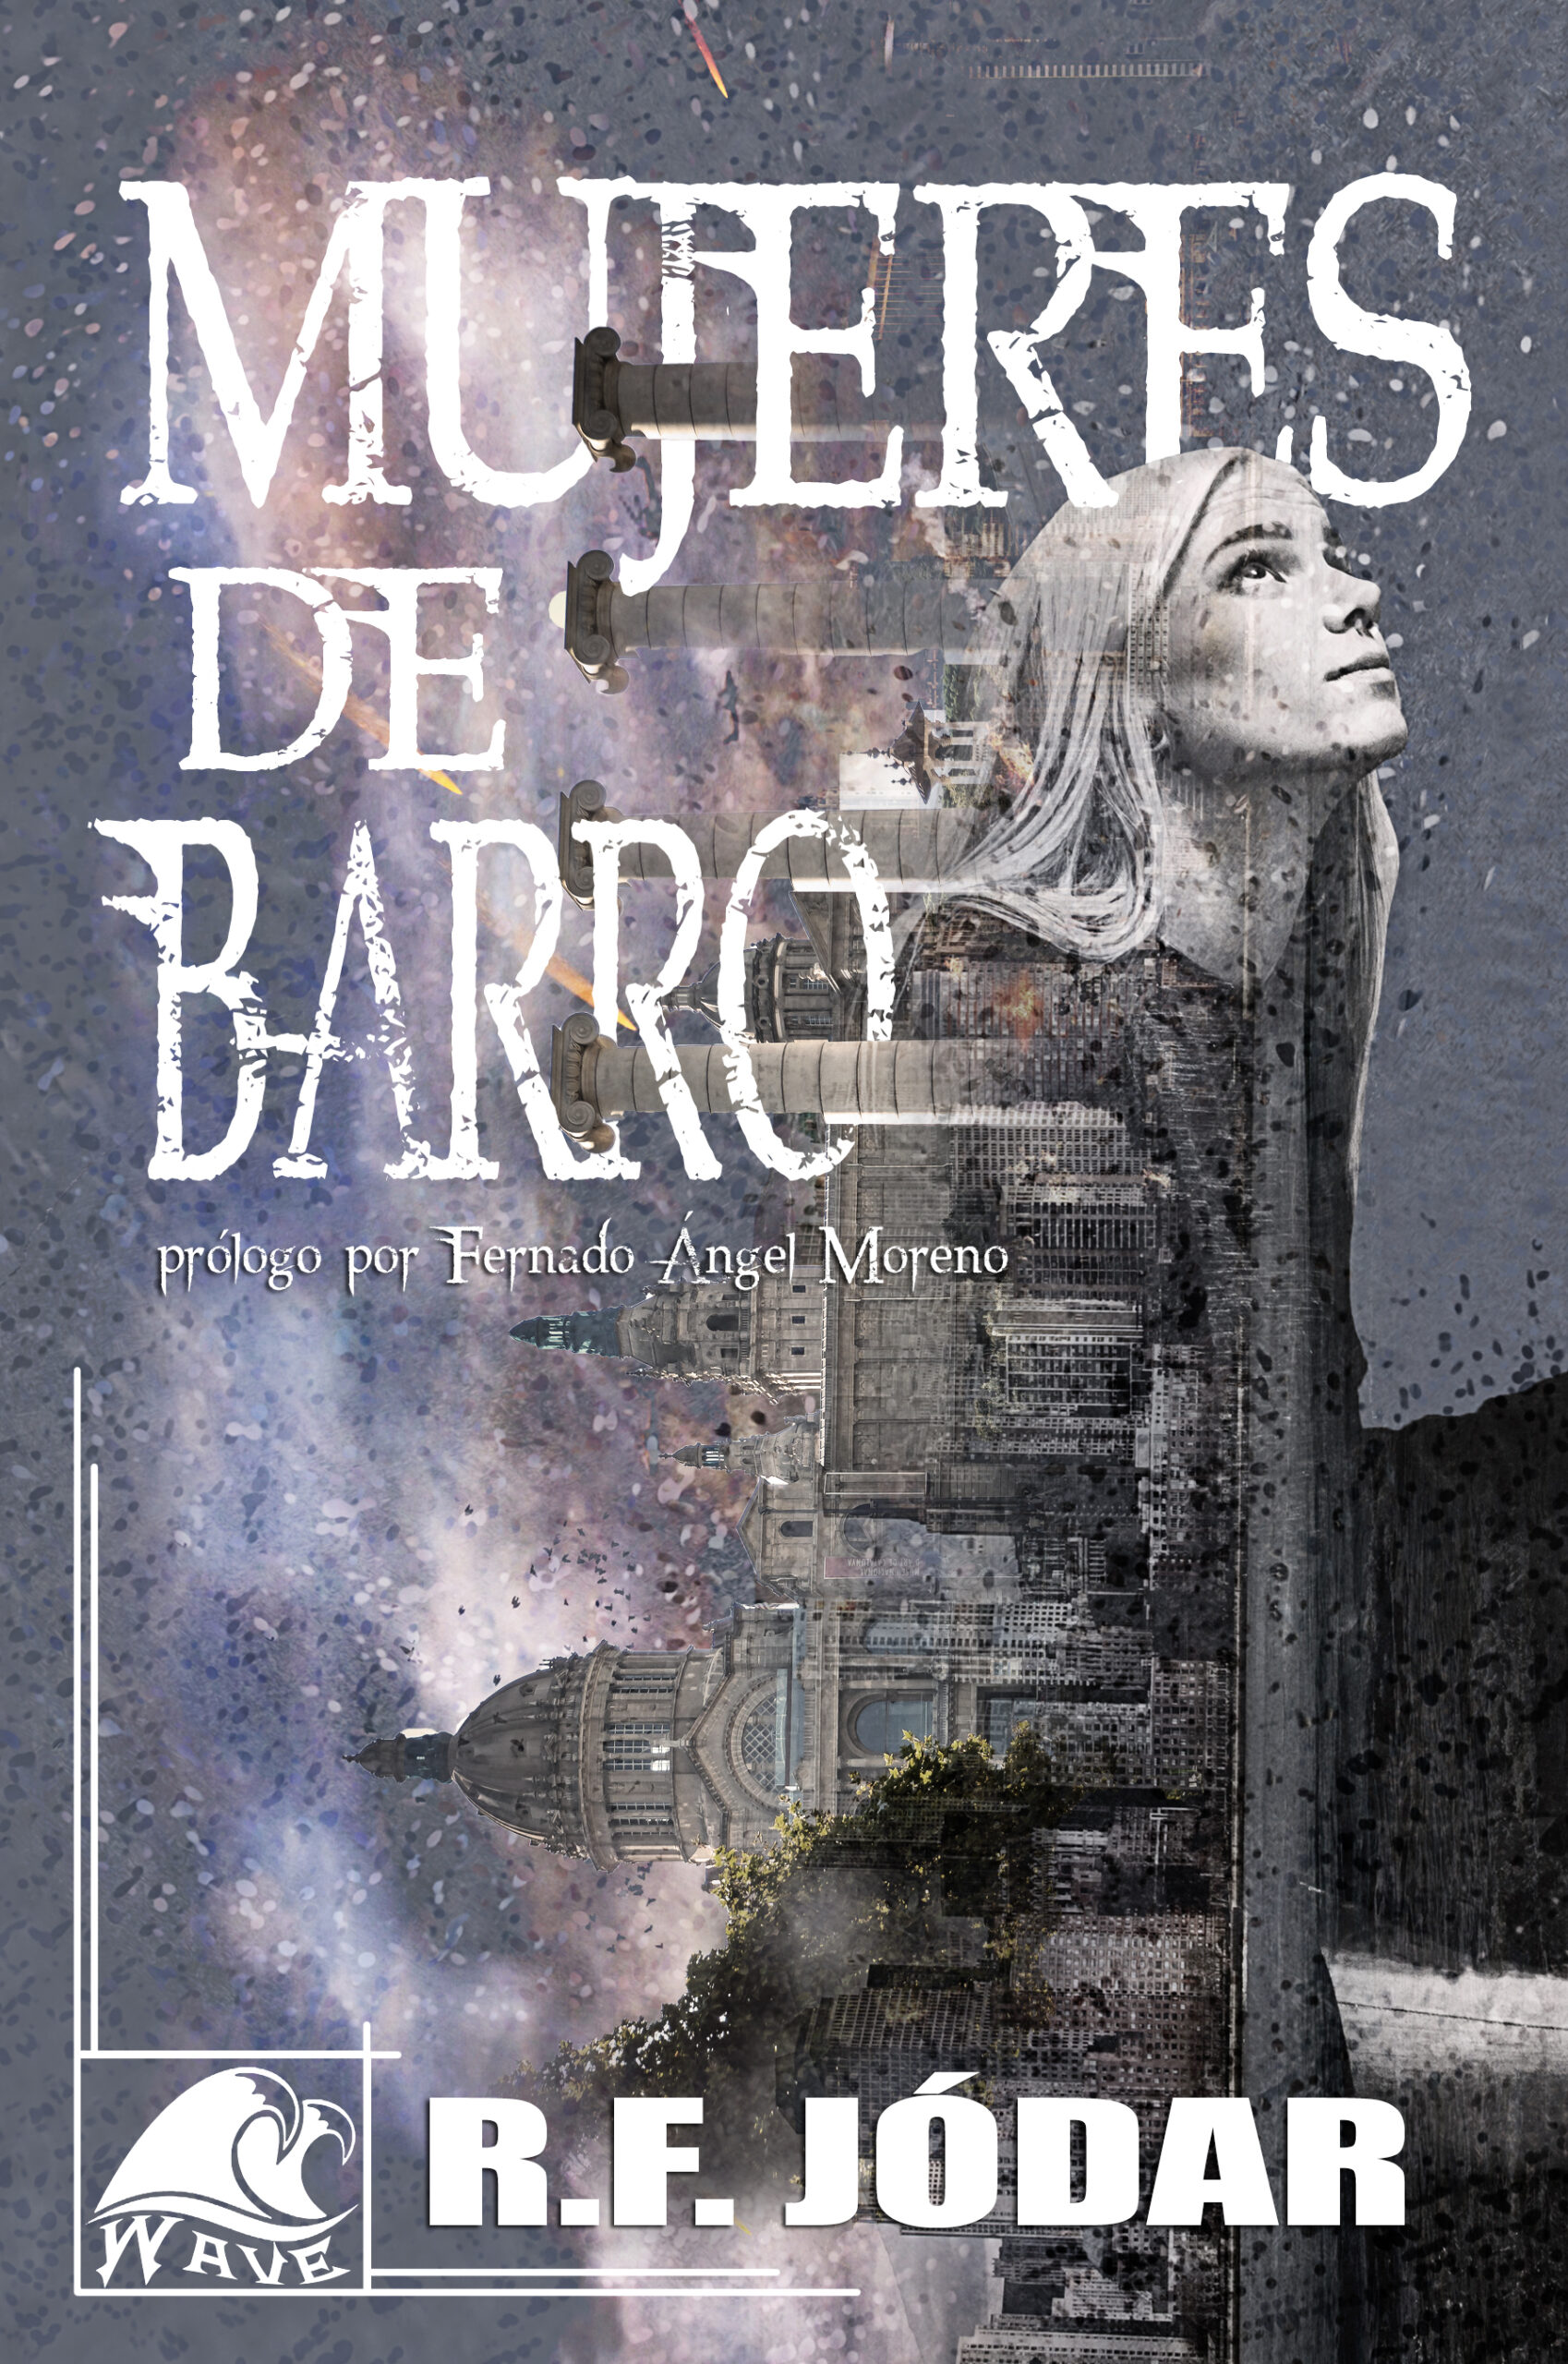 okładka książki Mueres de Barro